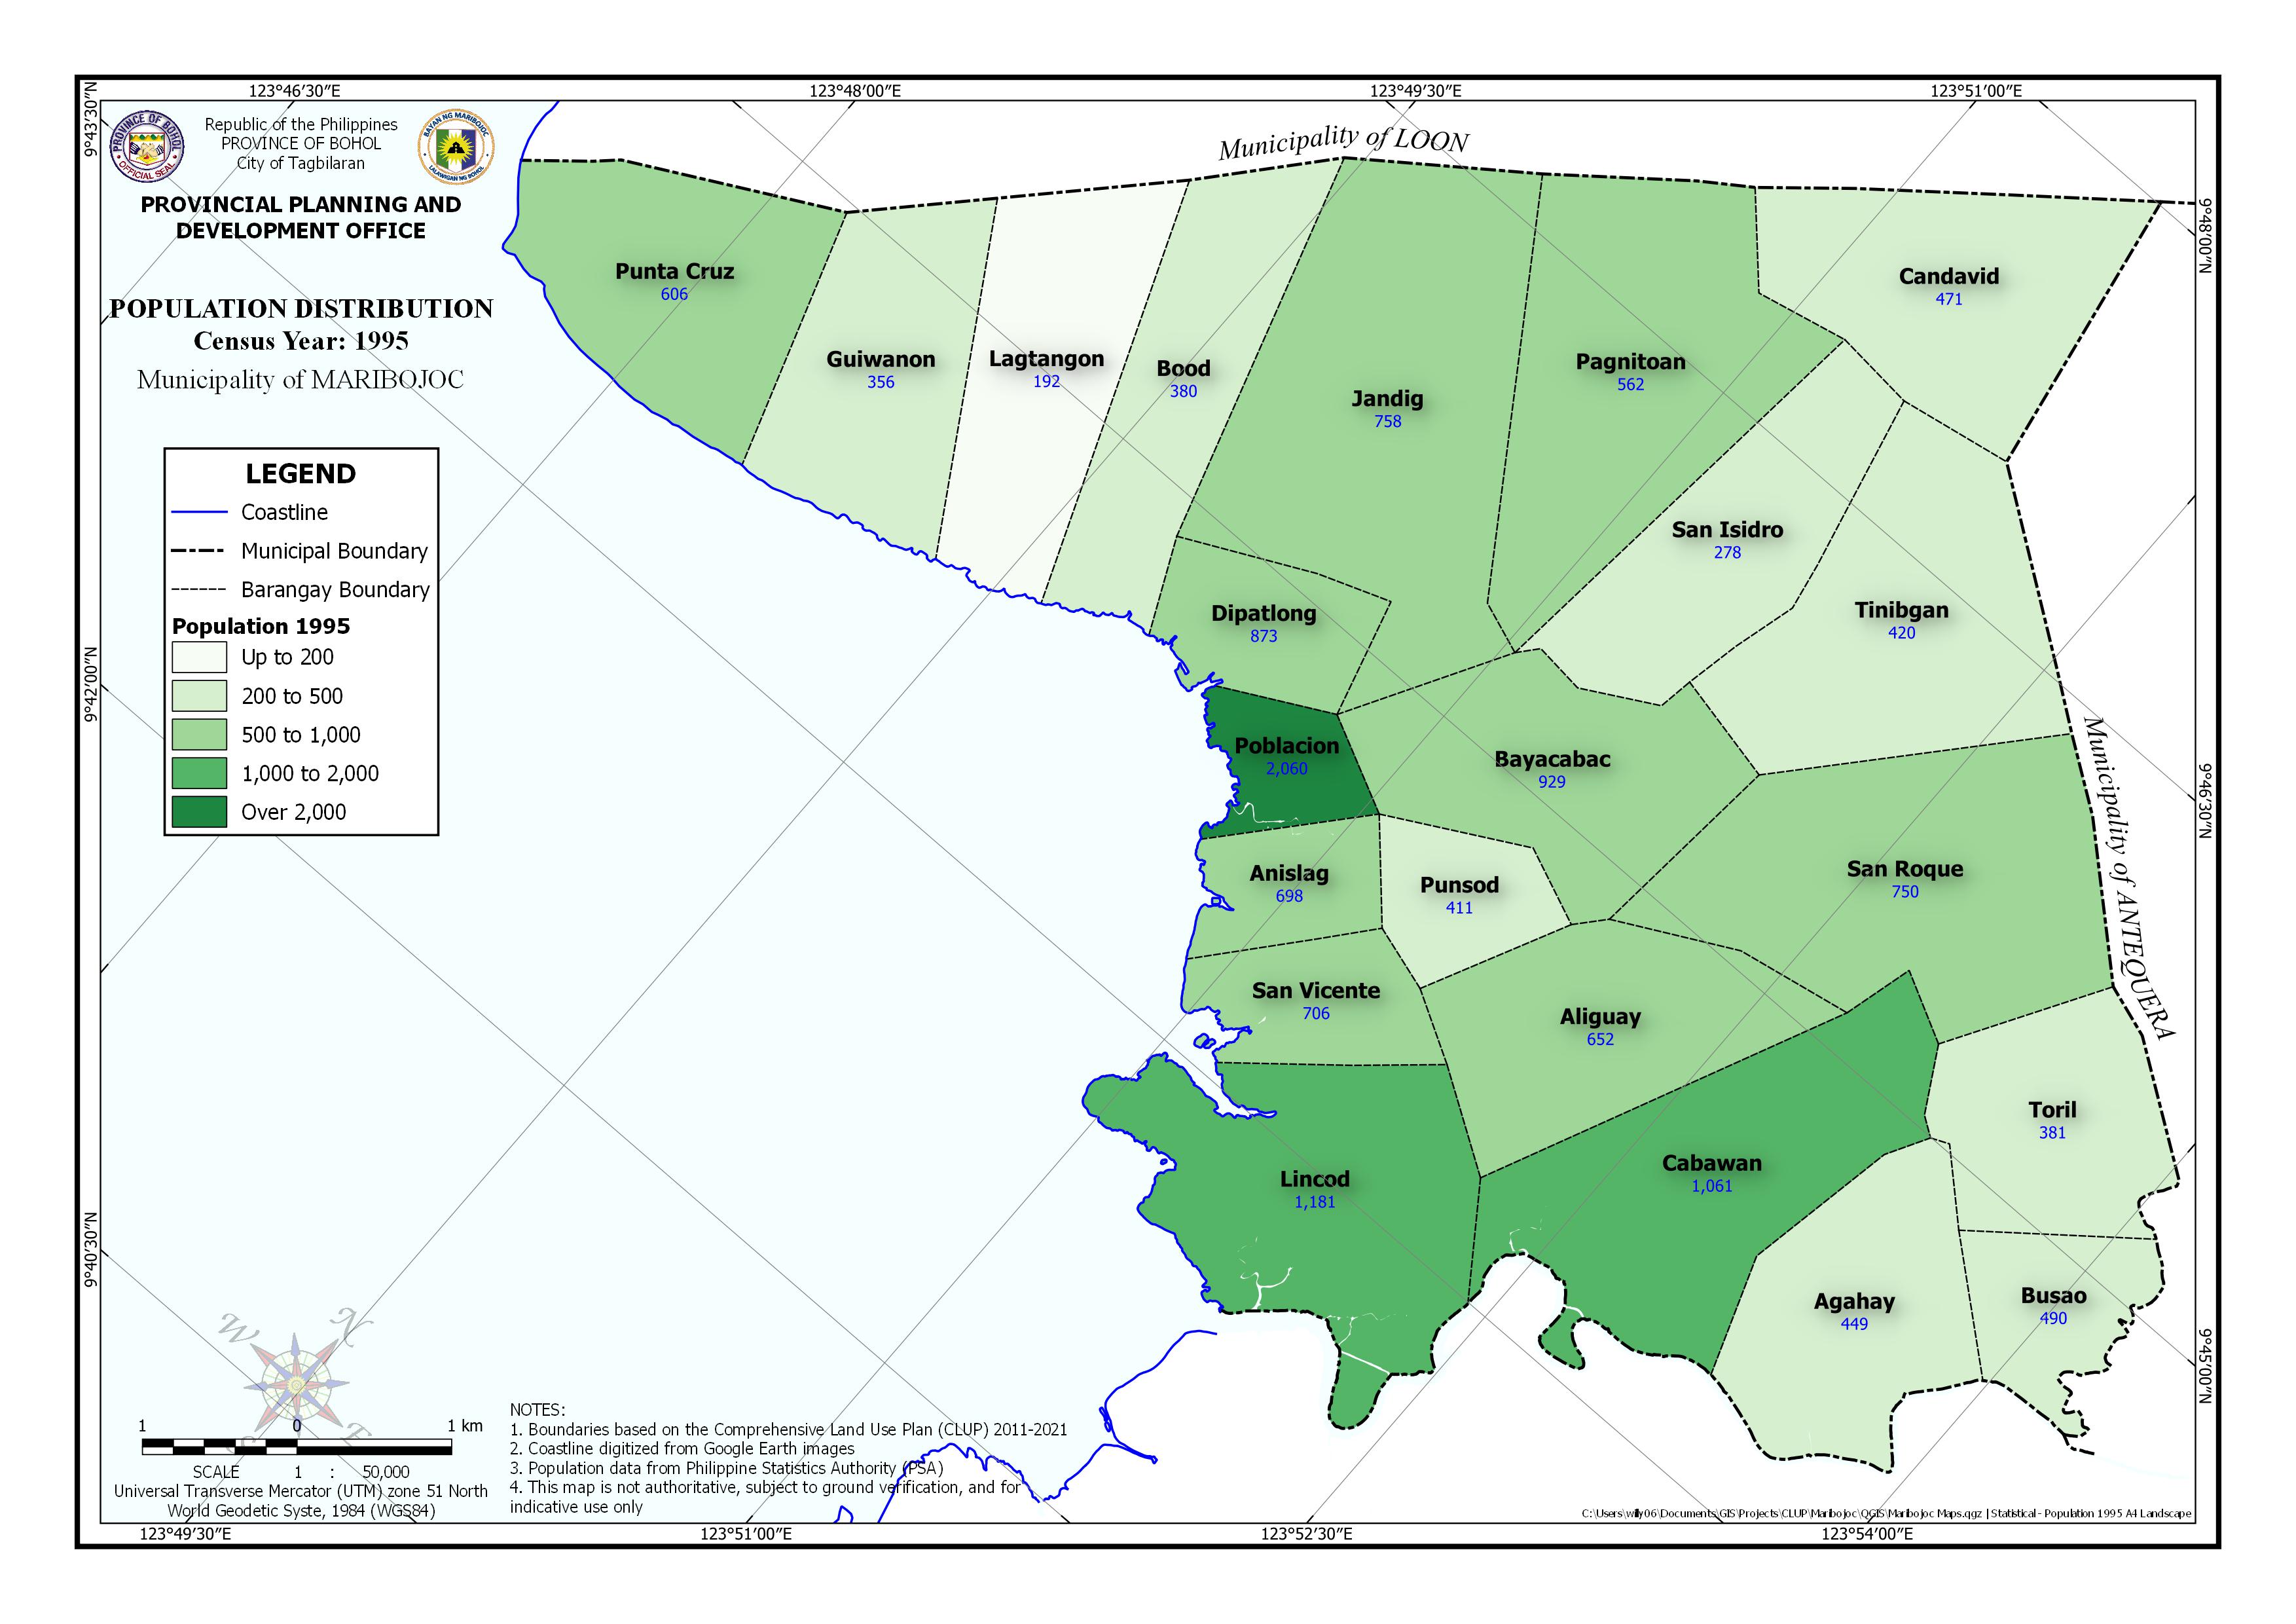 Population Distribution Census Year: 1995